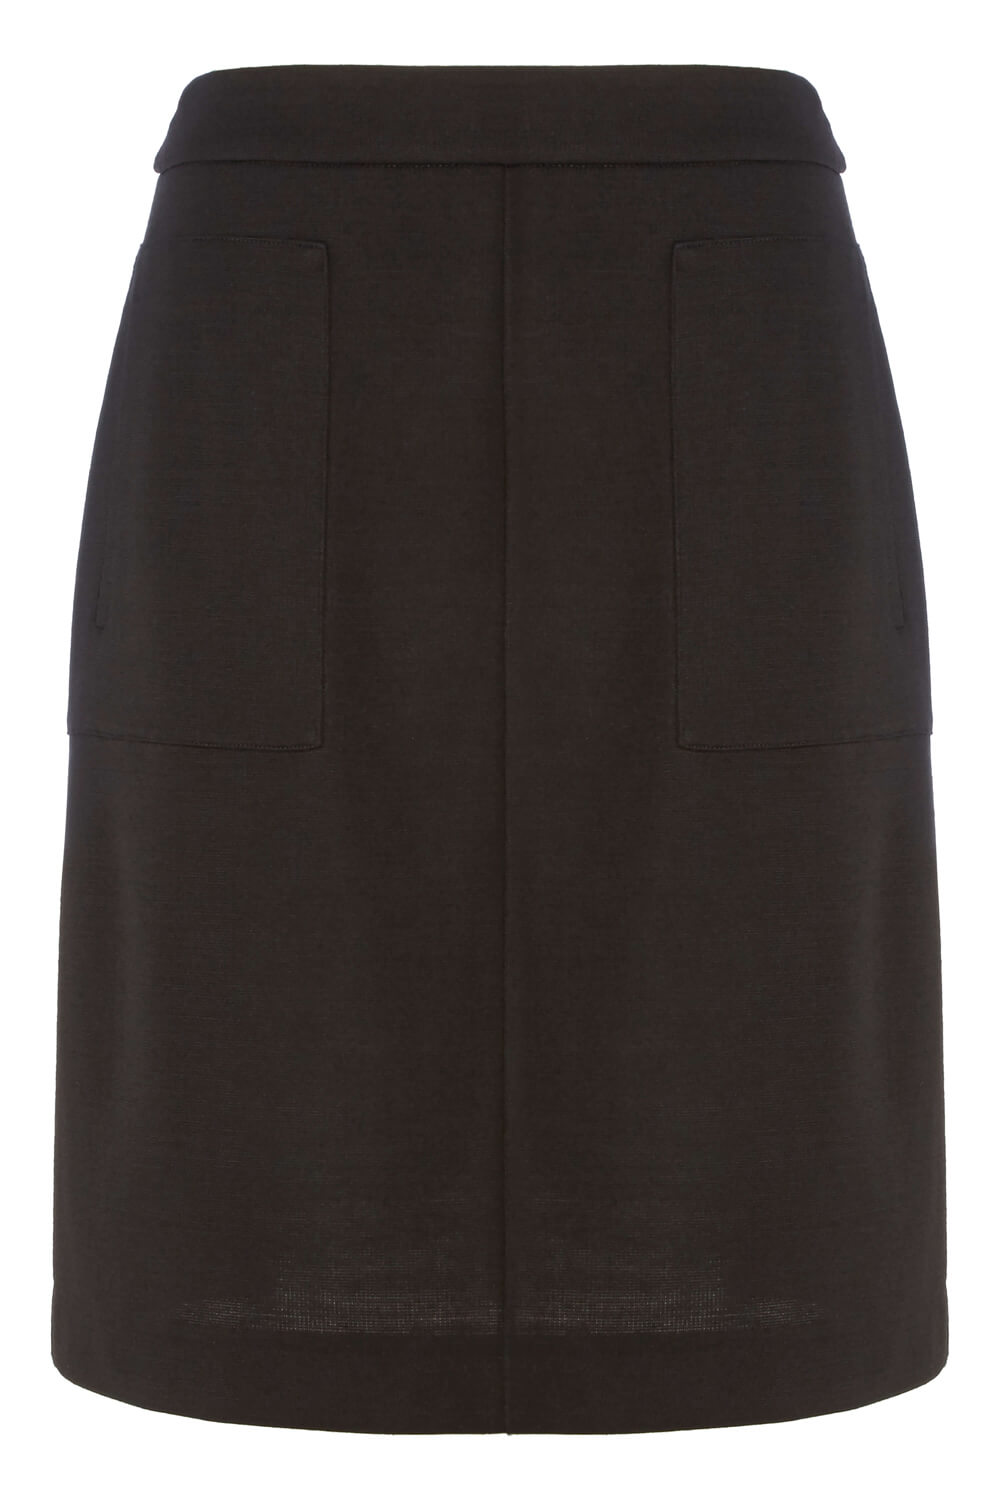 Black Textured Ponte Skirt, Image 5 of 5